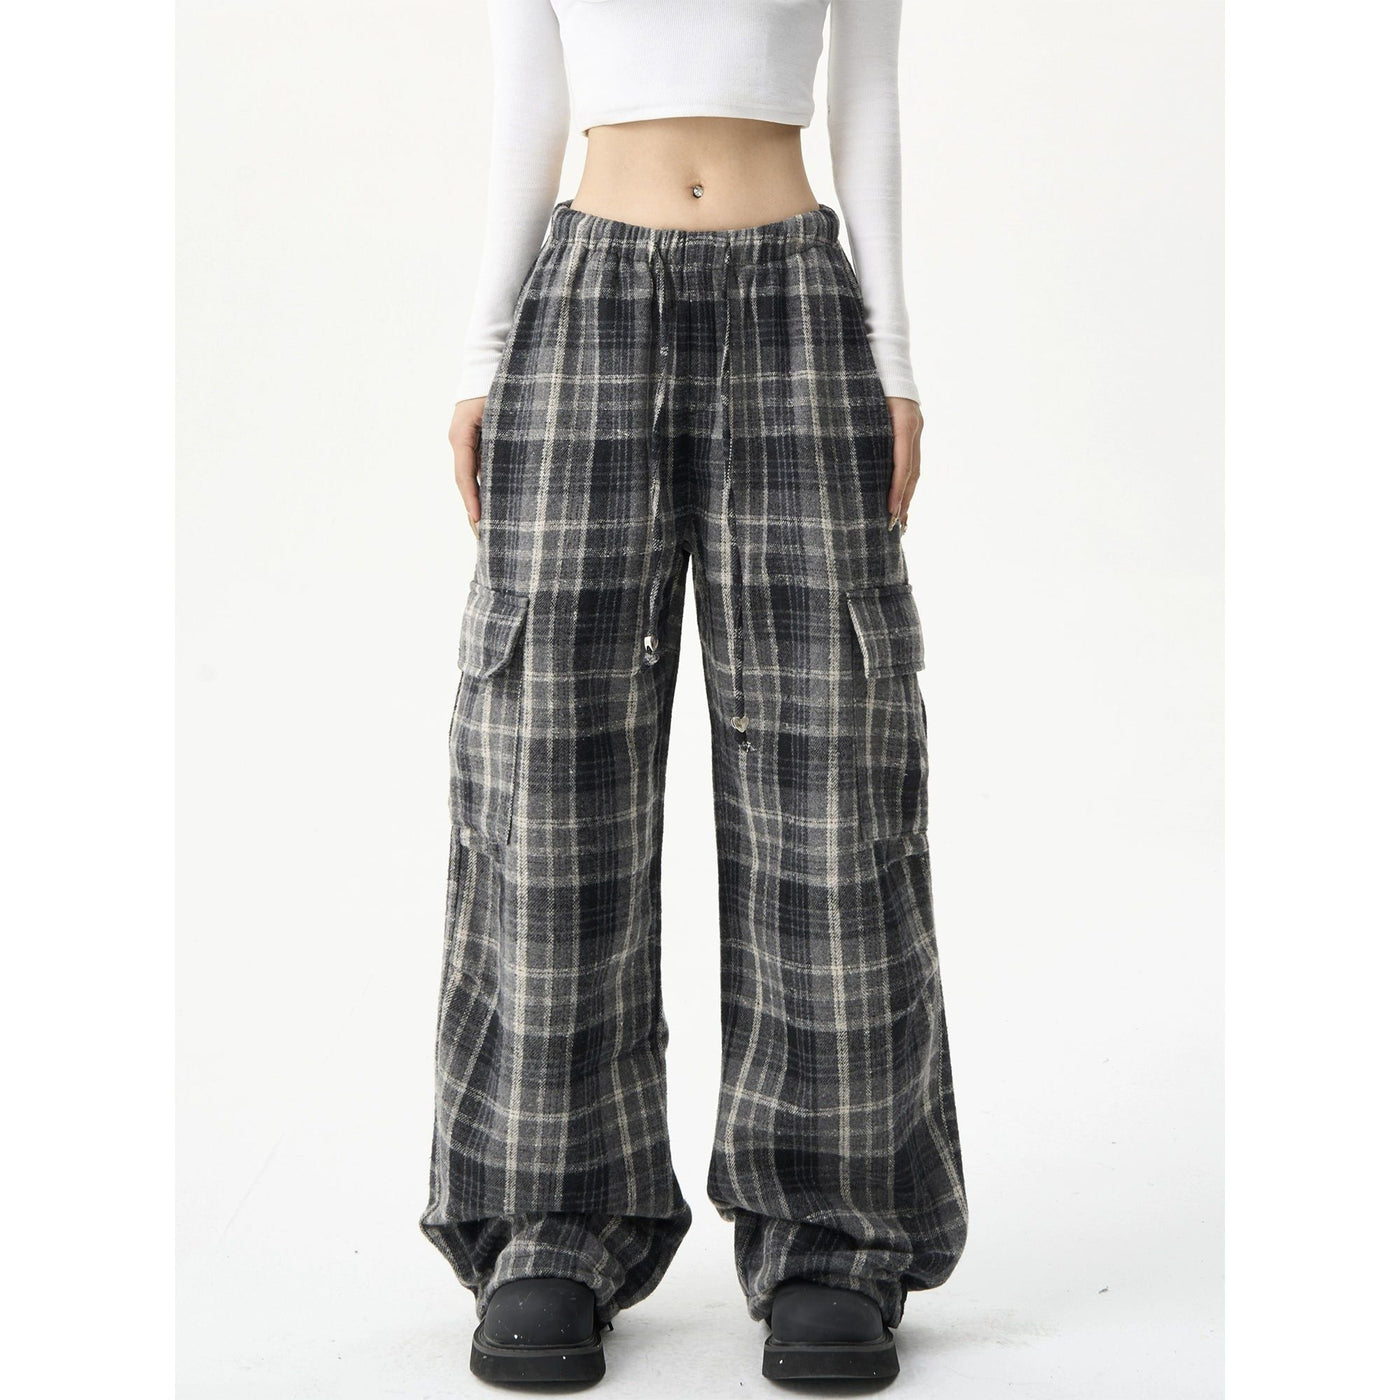 Drawstring Waist Plaid Cargo Pants Korean Street Fashion Pants By MaxDstr Shop Online at OH Vault